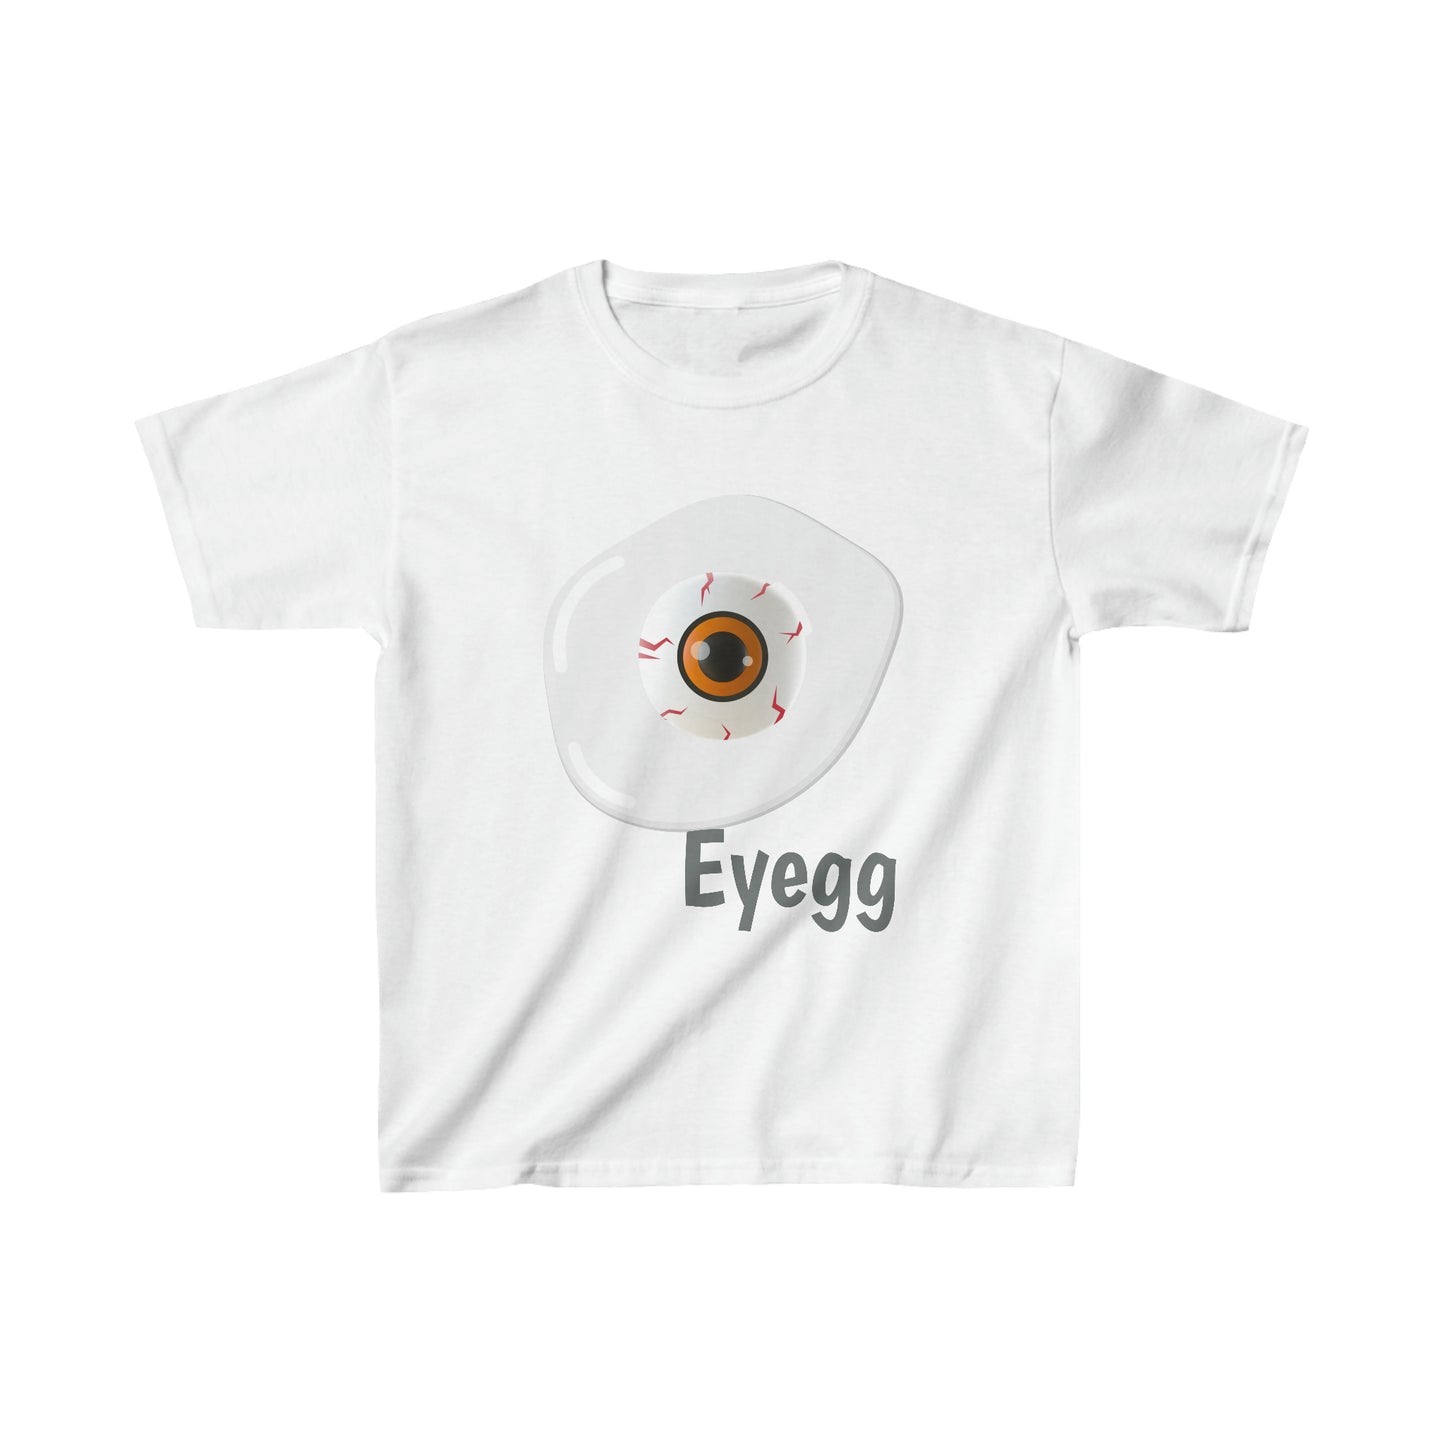 Eyegg (Kids Graphic Tee)